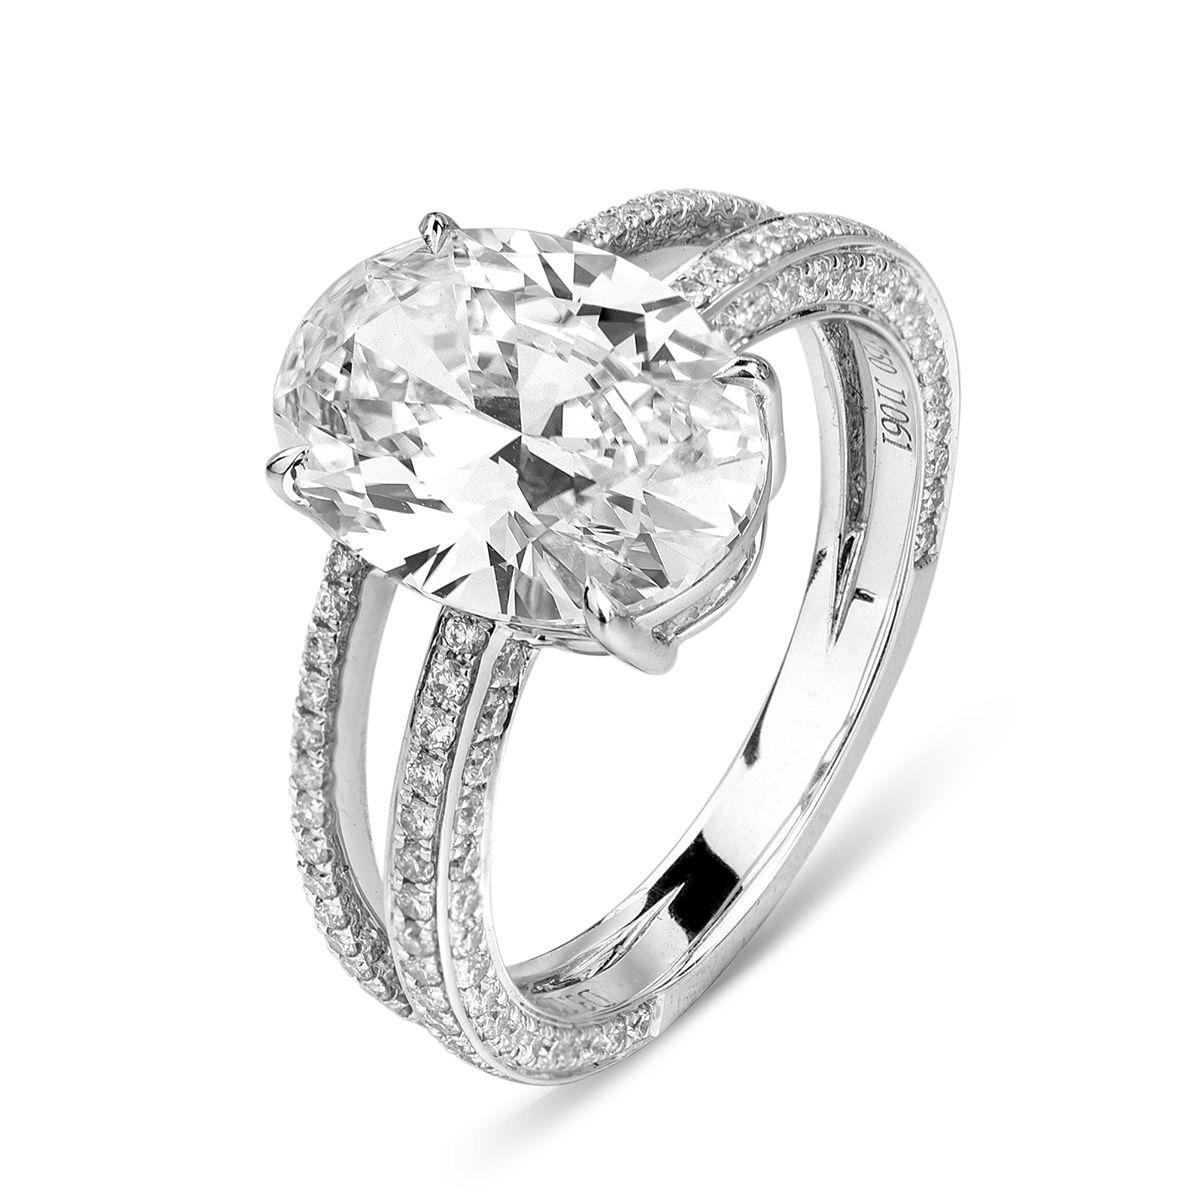  White Diamond Ring, 3.70 Ct. TW, Oval shape, GIA Certified, 2161054368